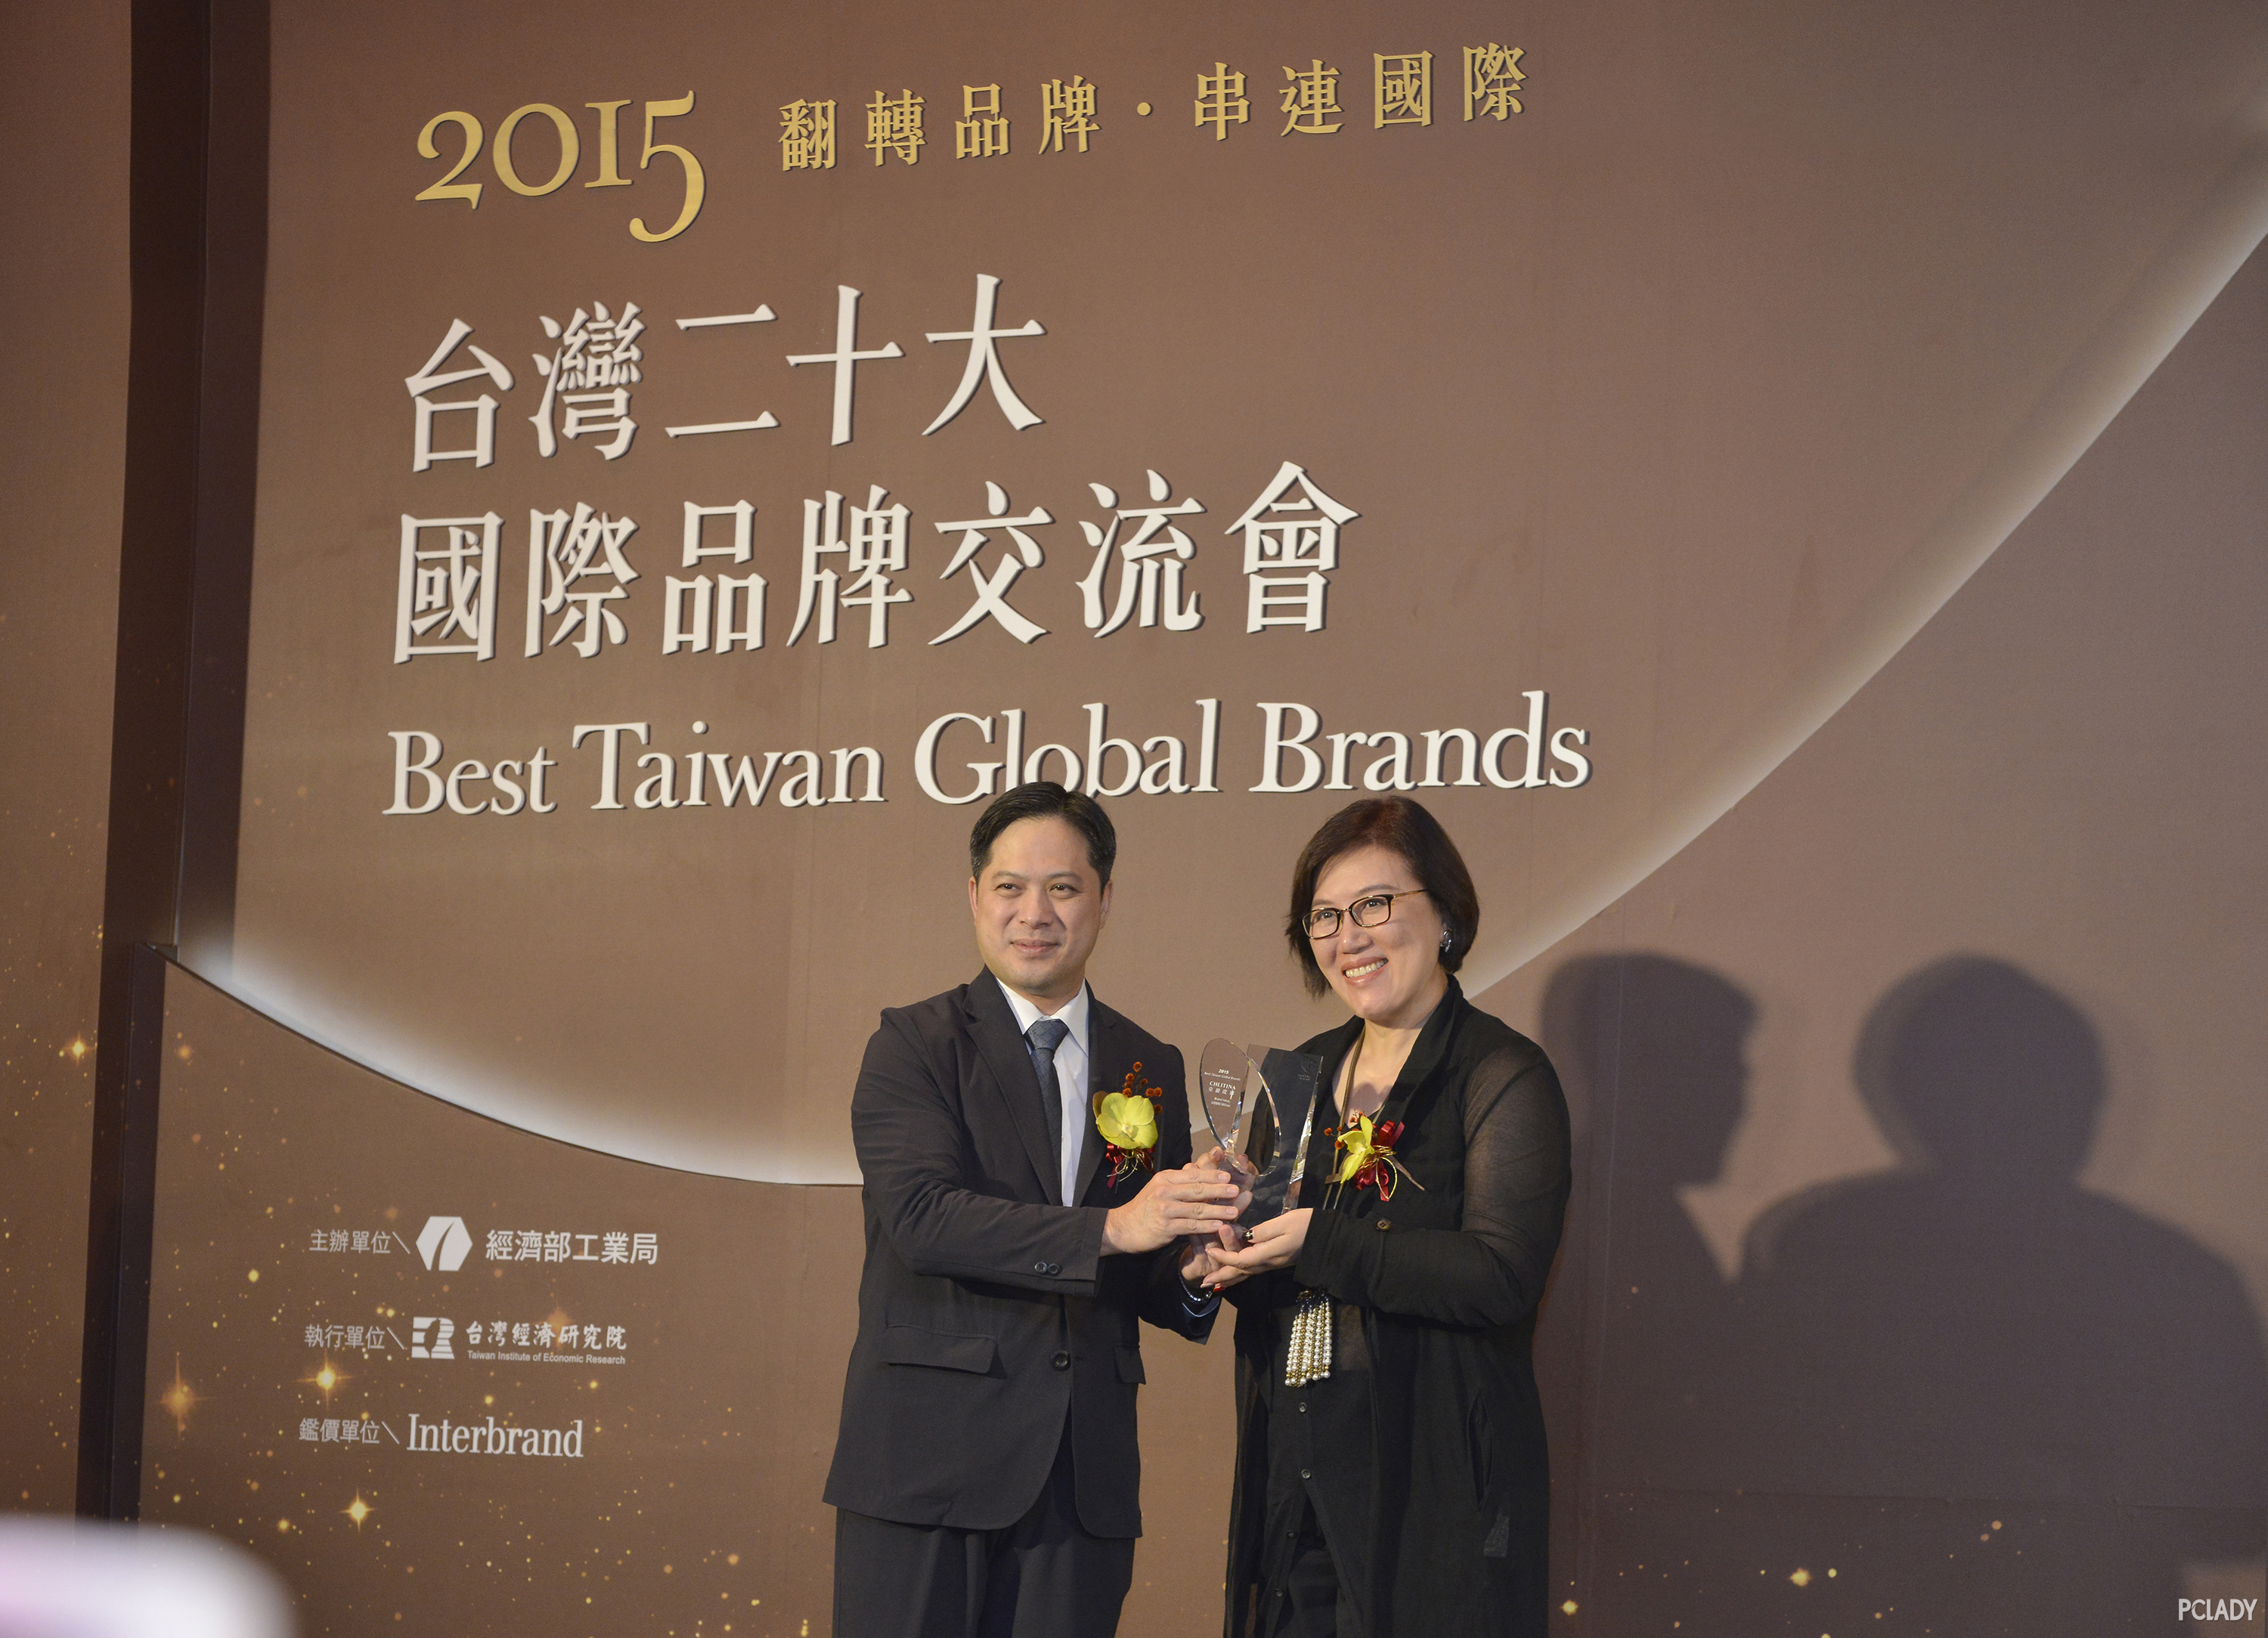 Interbrand公布台湾二十大国际品牌 克丽缇娜创美业榜史